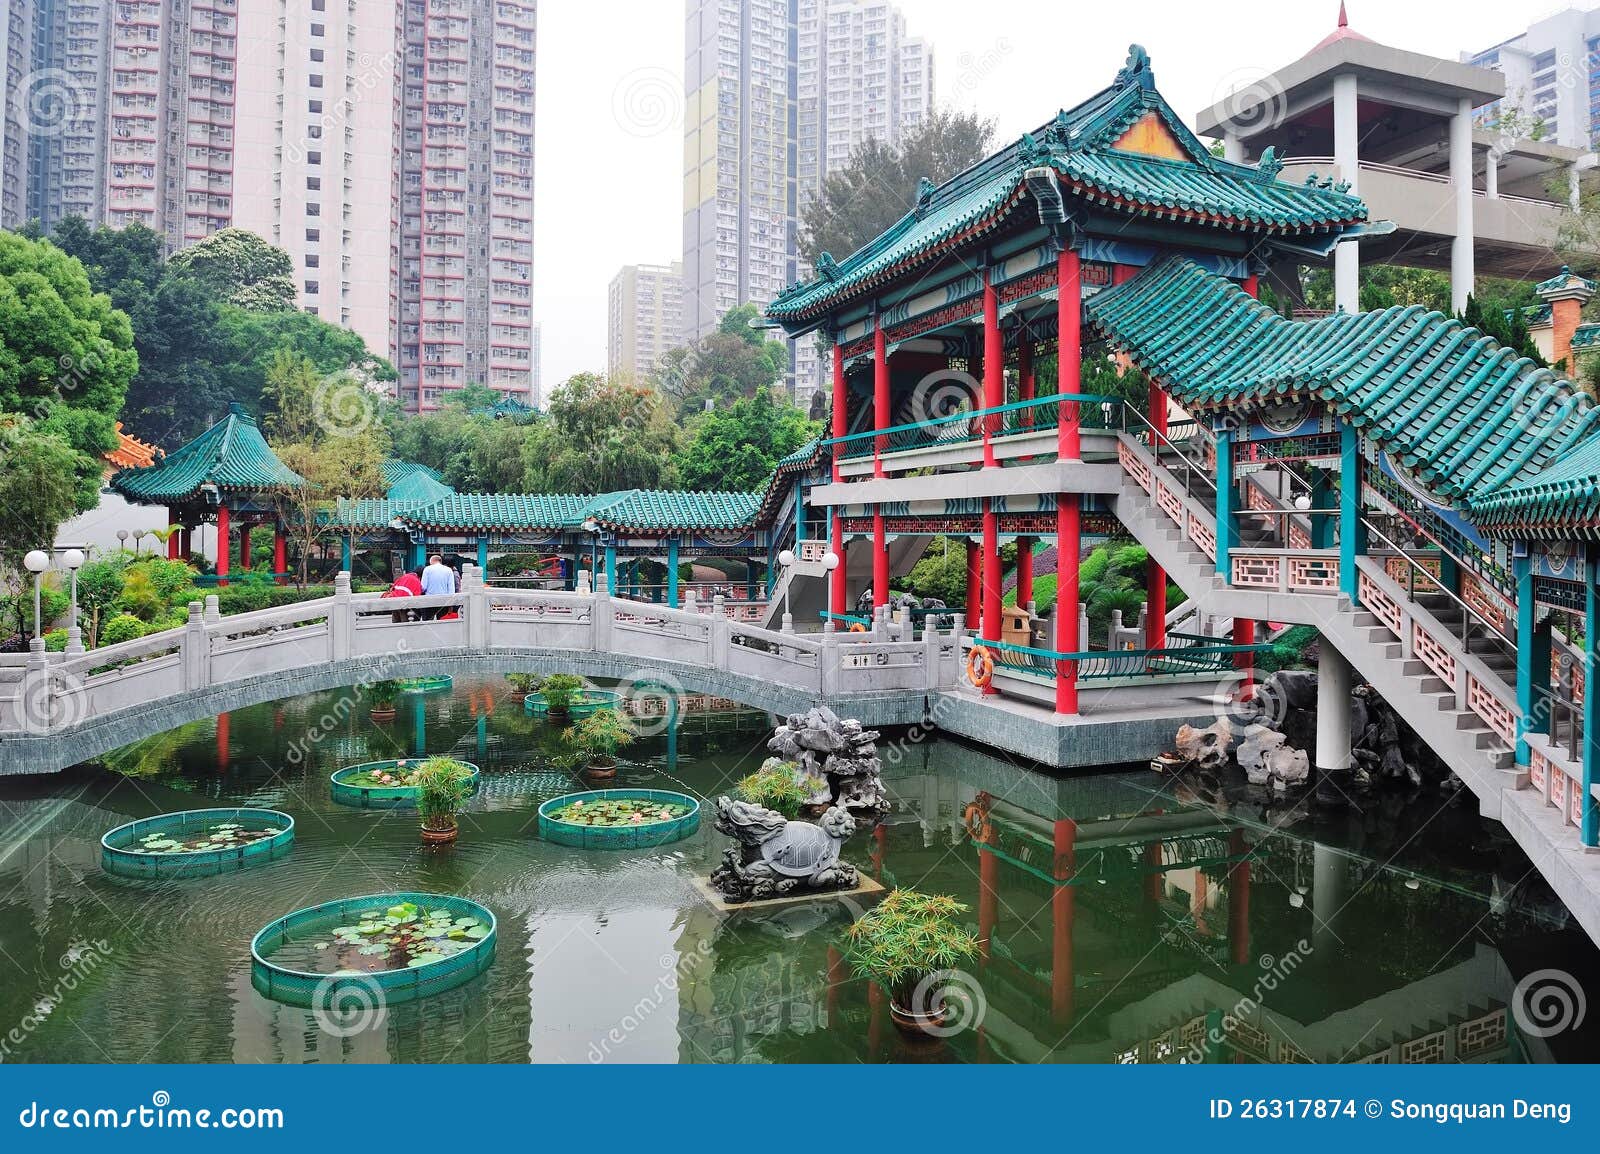 Hong Kong garden stock photo. Image of color, traditional - 26317874